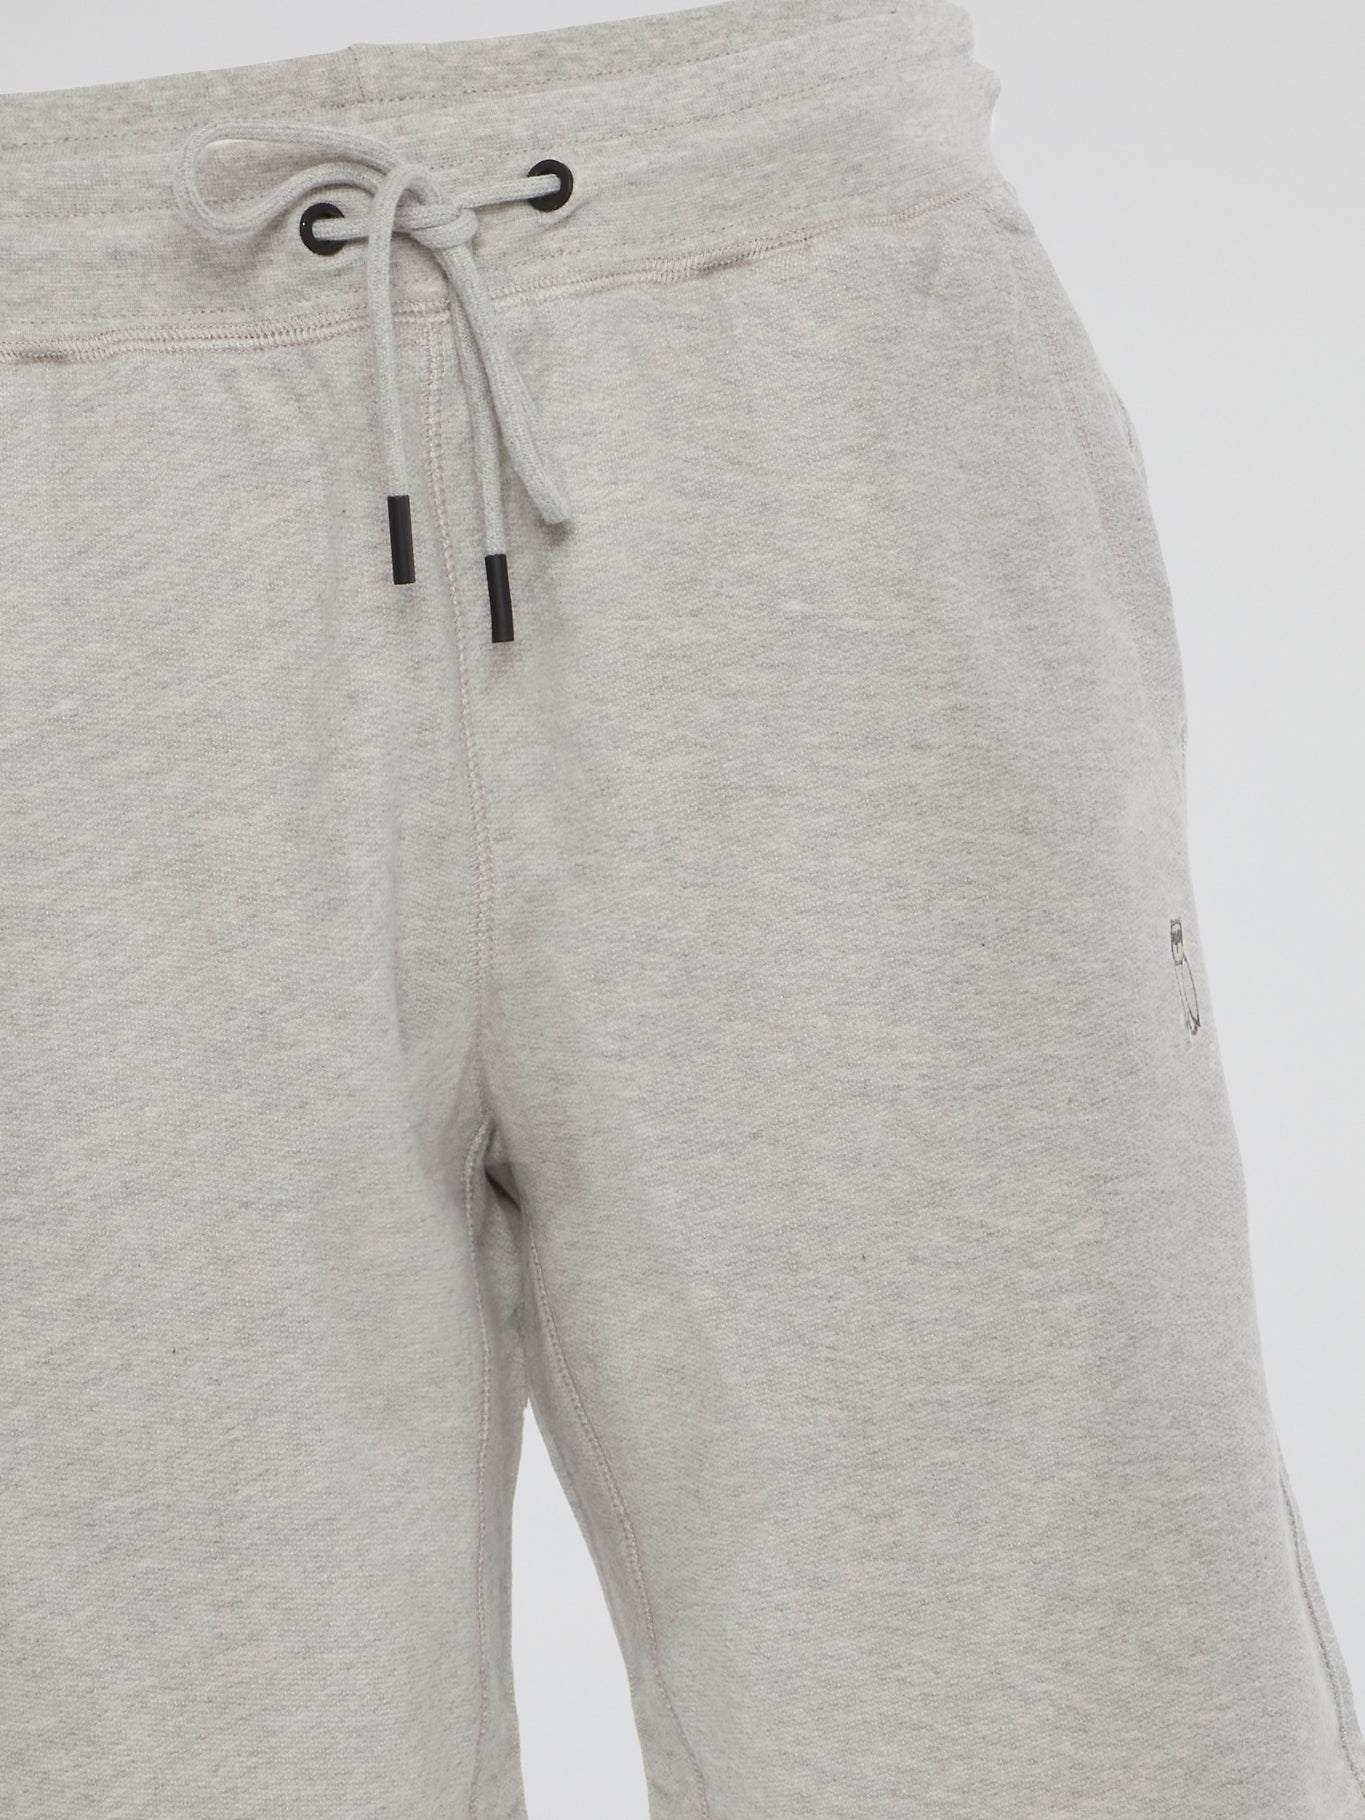 Essentials Global – Grey Shorts Maison-B-More Sweat Store